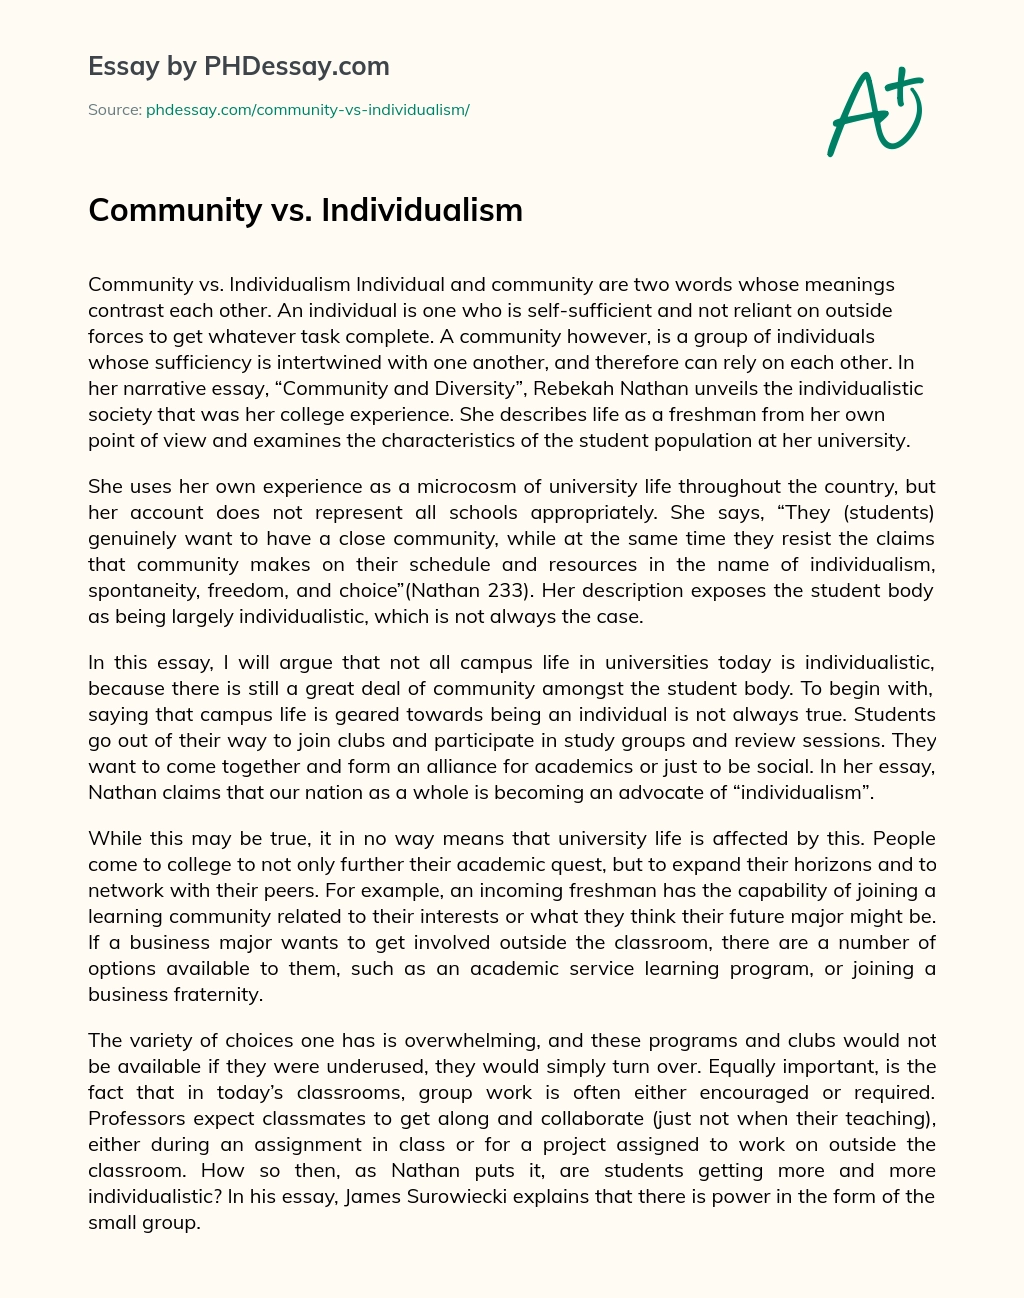 Community vs. Individualism essay